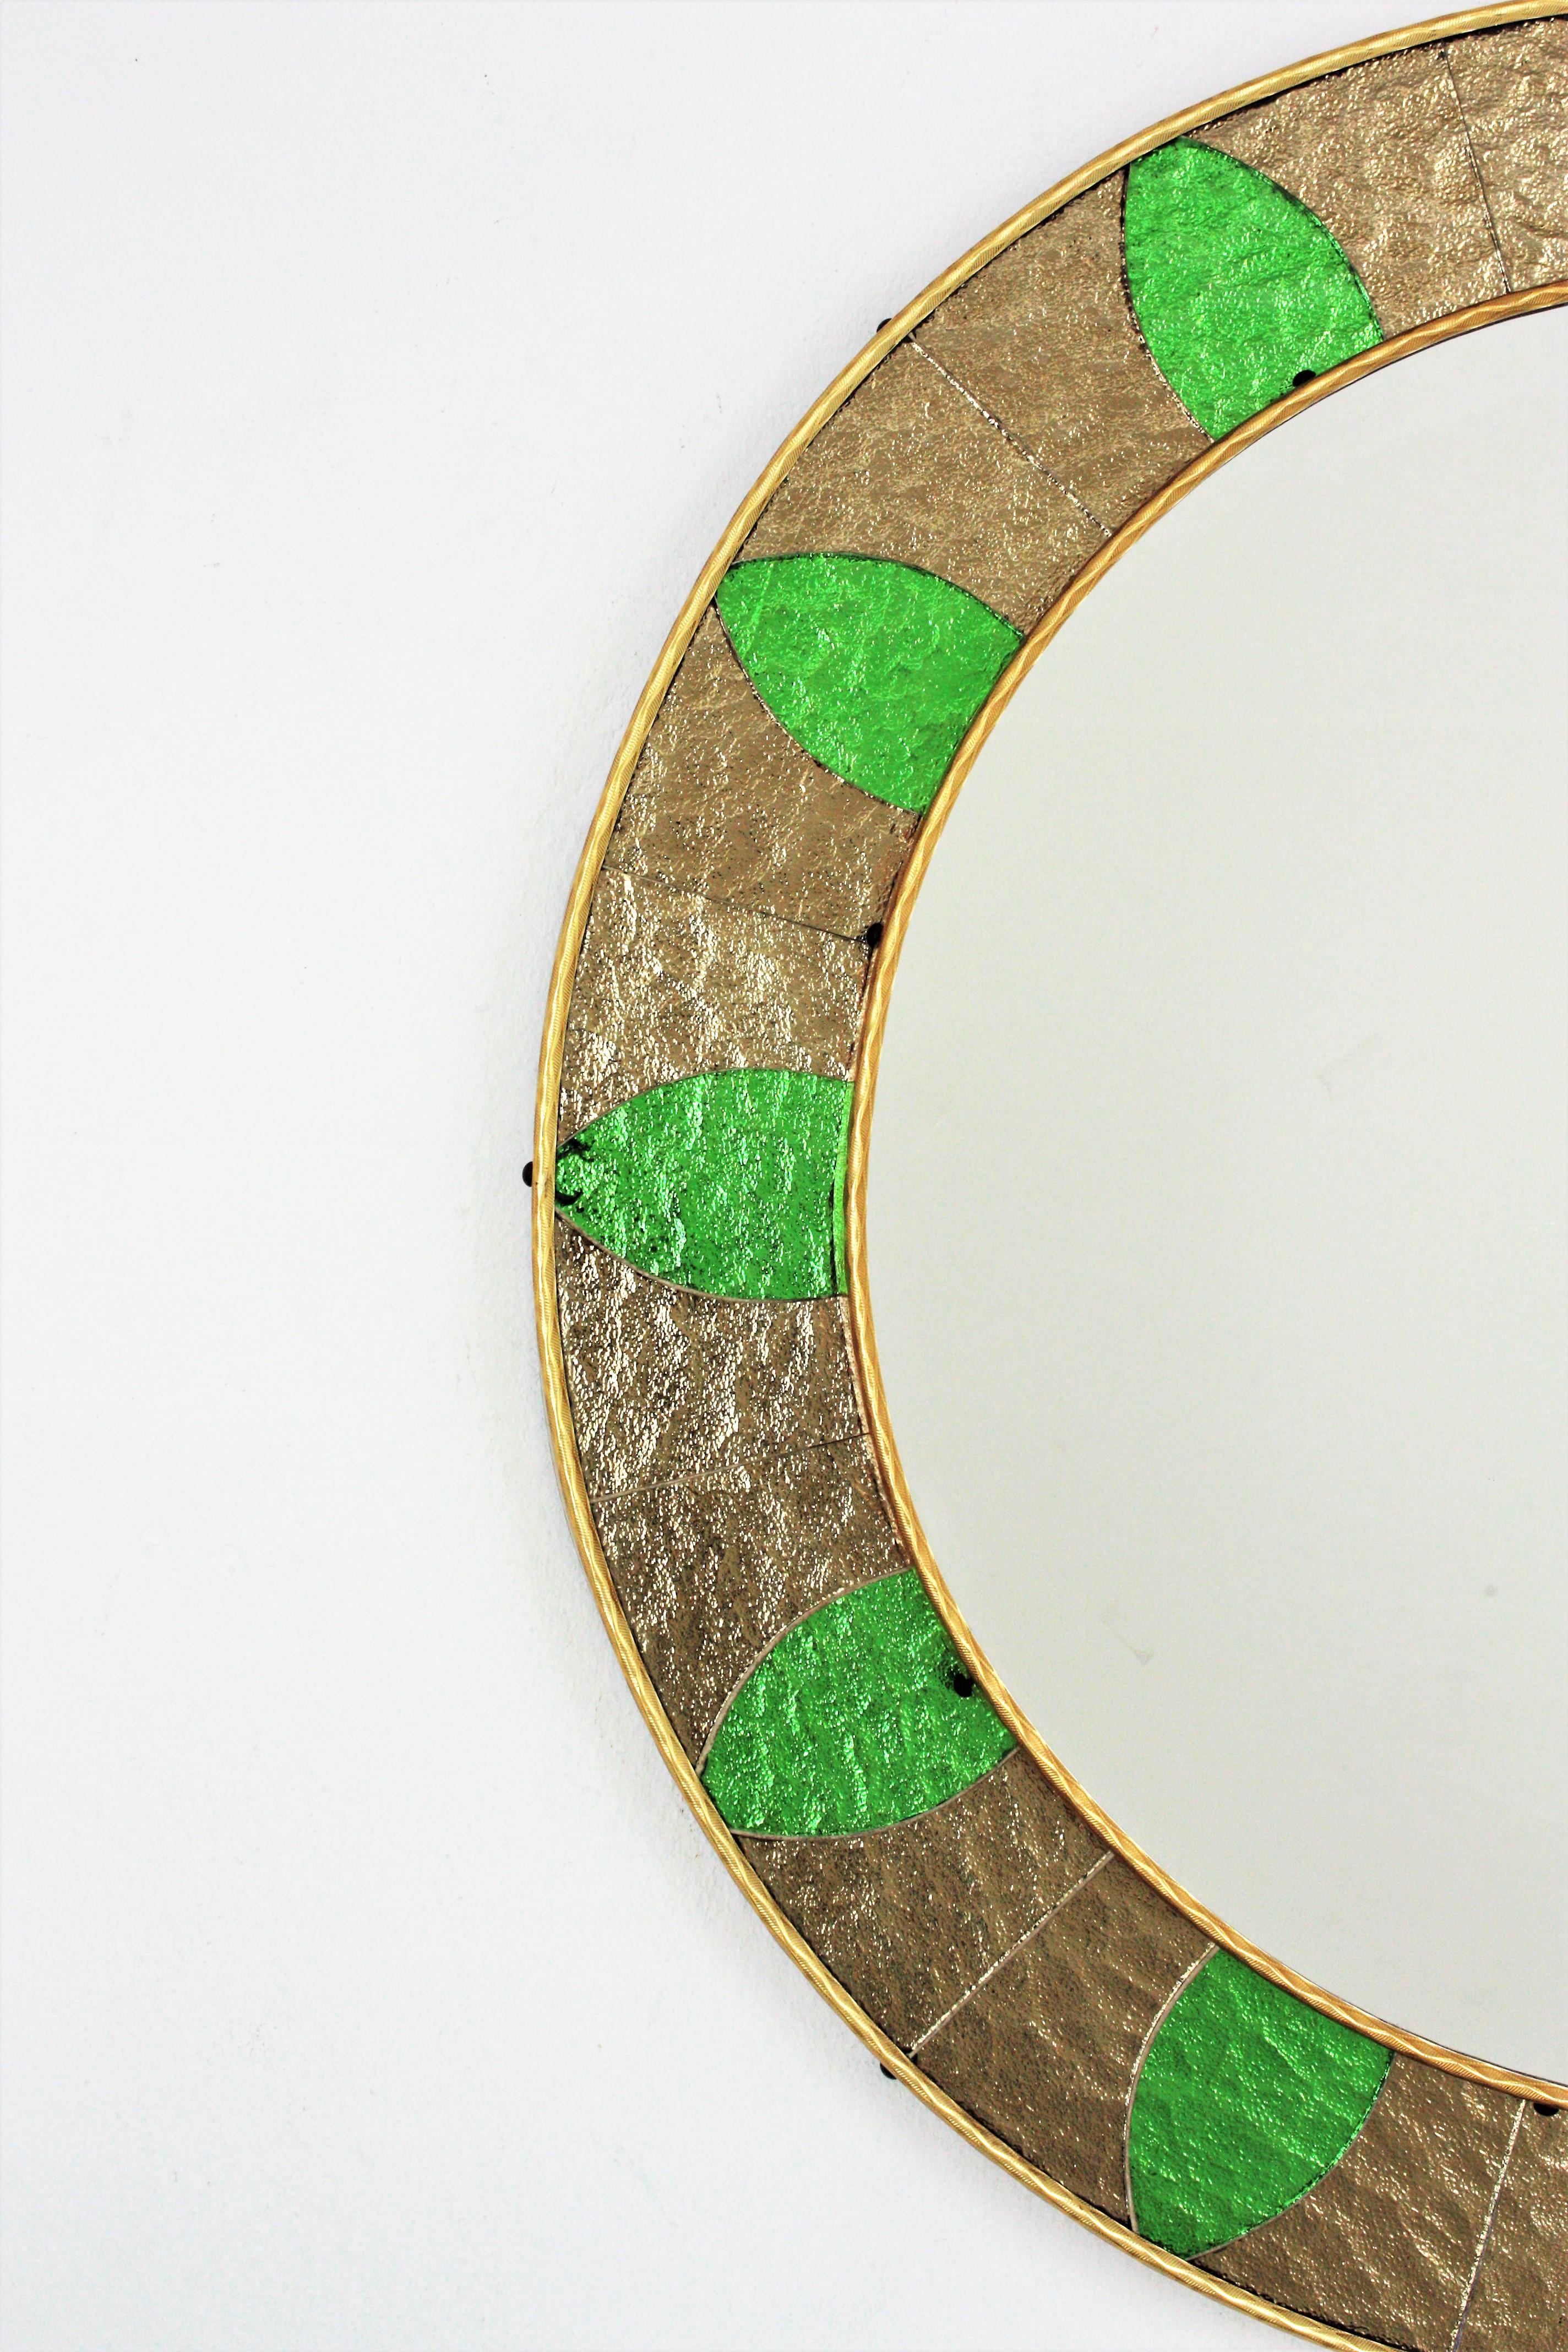 Spanish Round Wall Mirror with Sunburst Bronze Green Glass Mosaic Frame, 1960s For Sale